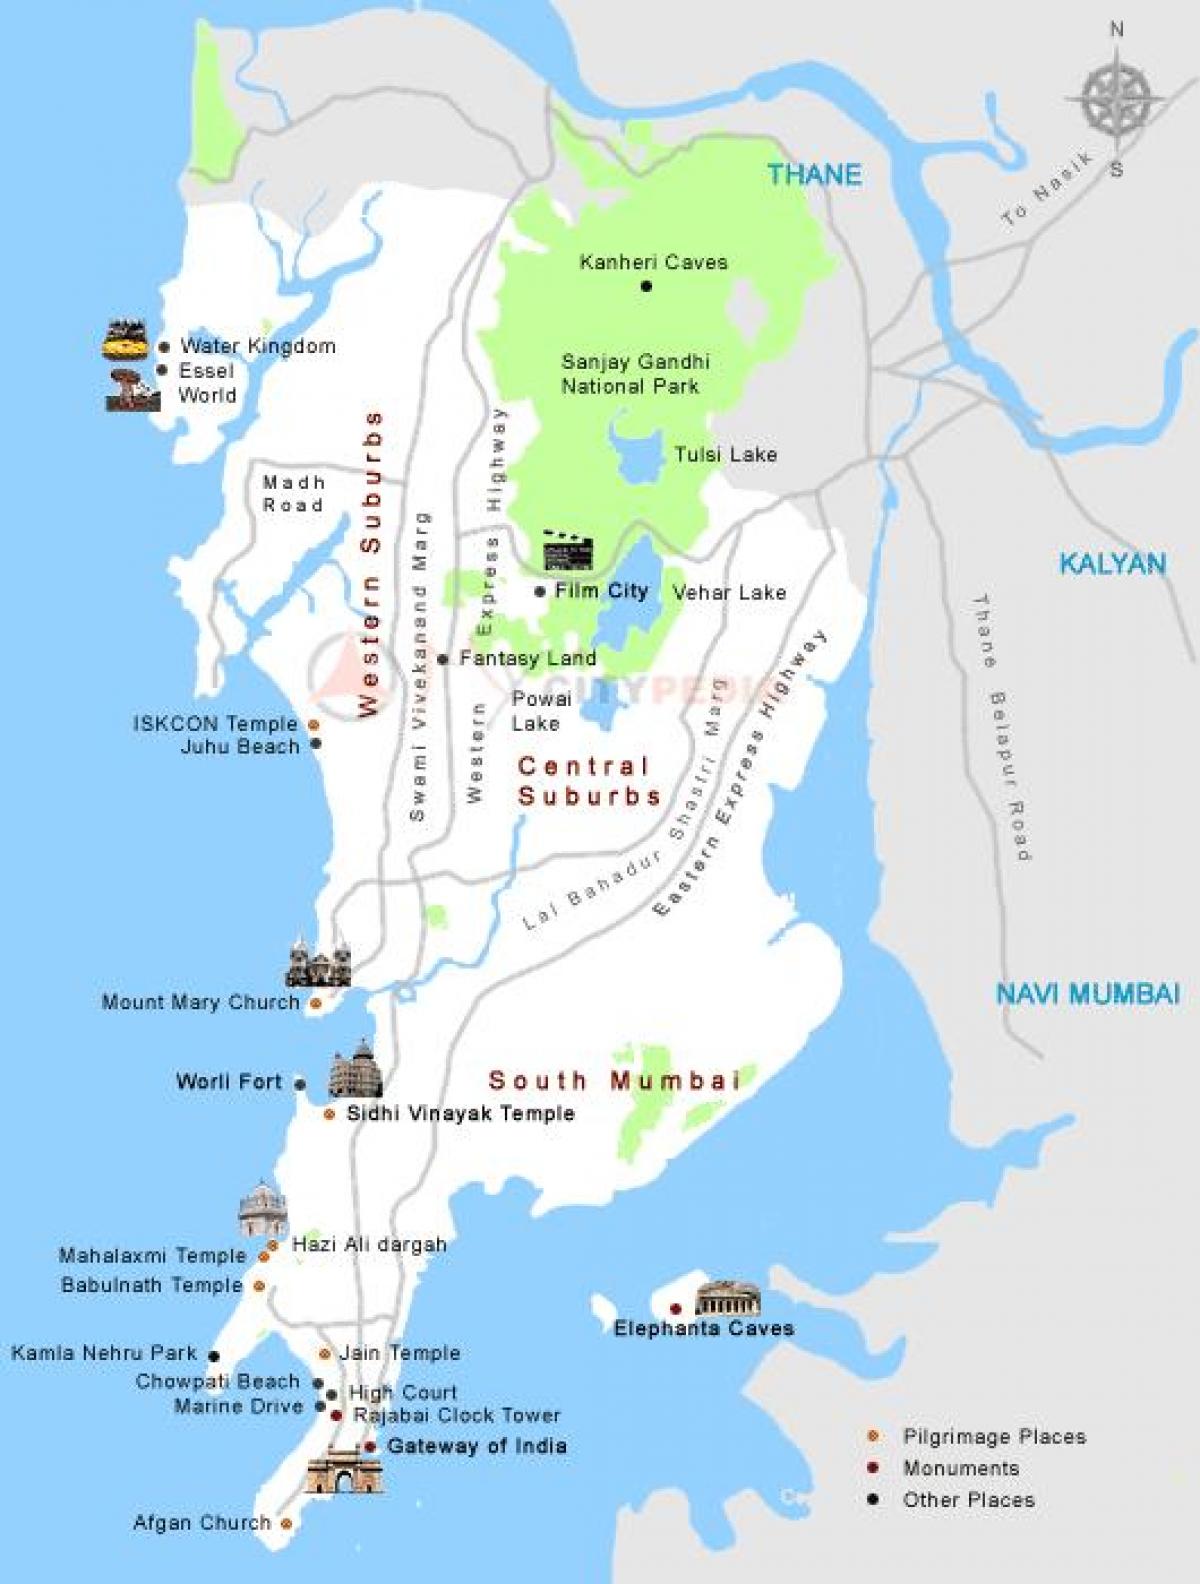 Mumbai darshan paikkoja kartalla